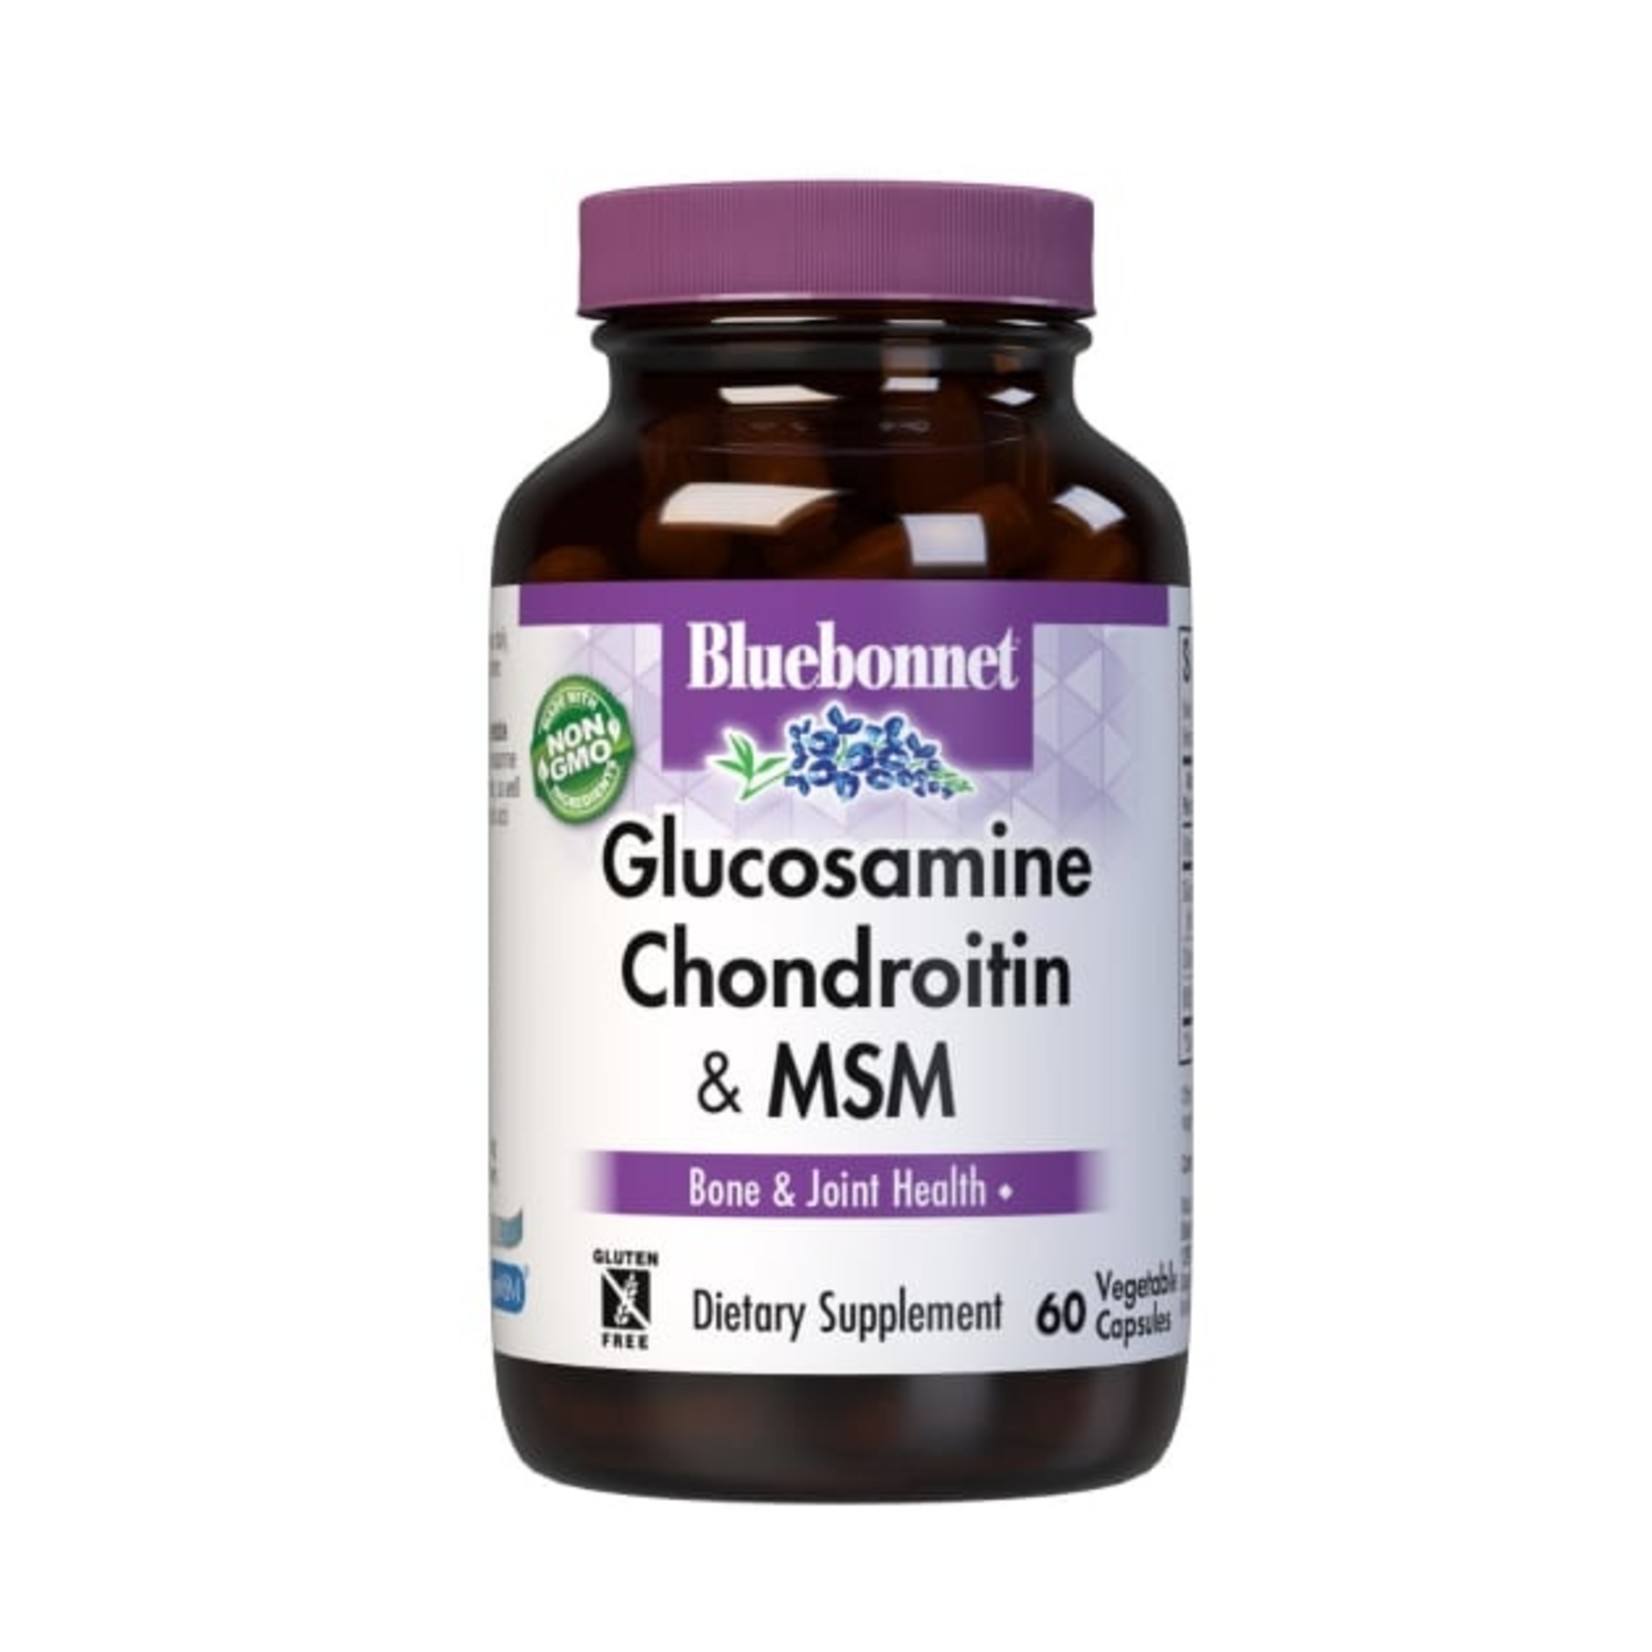 Bluebonnet Bluebonnet - Glucosamine Chondroitin with MSM - 60 Capsules